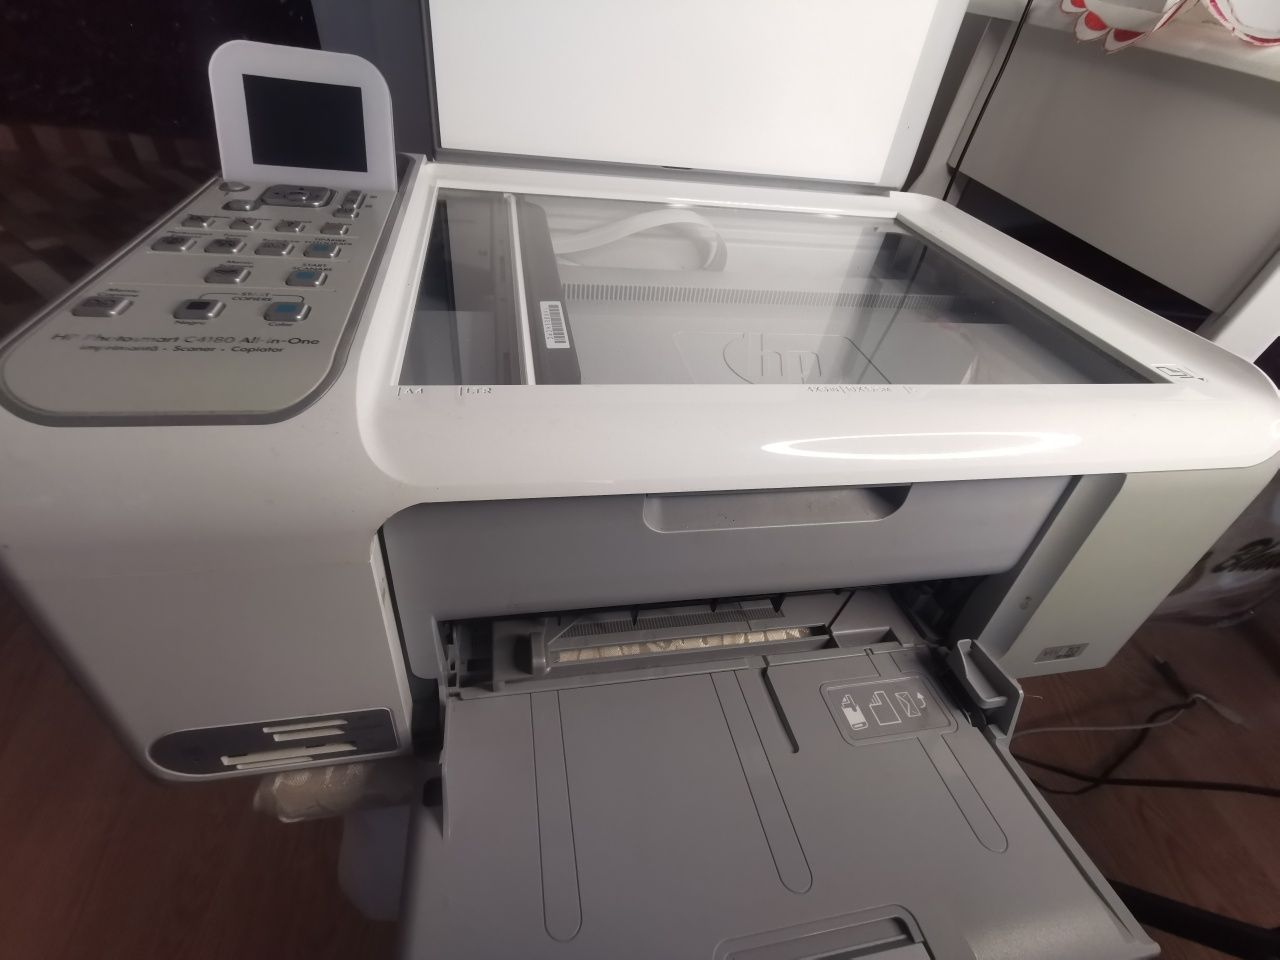 Imprimanta HP 4180